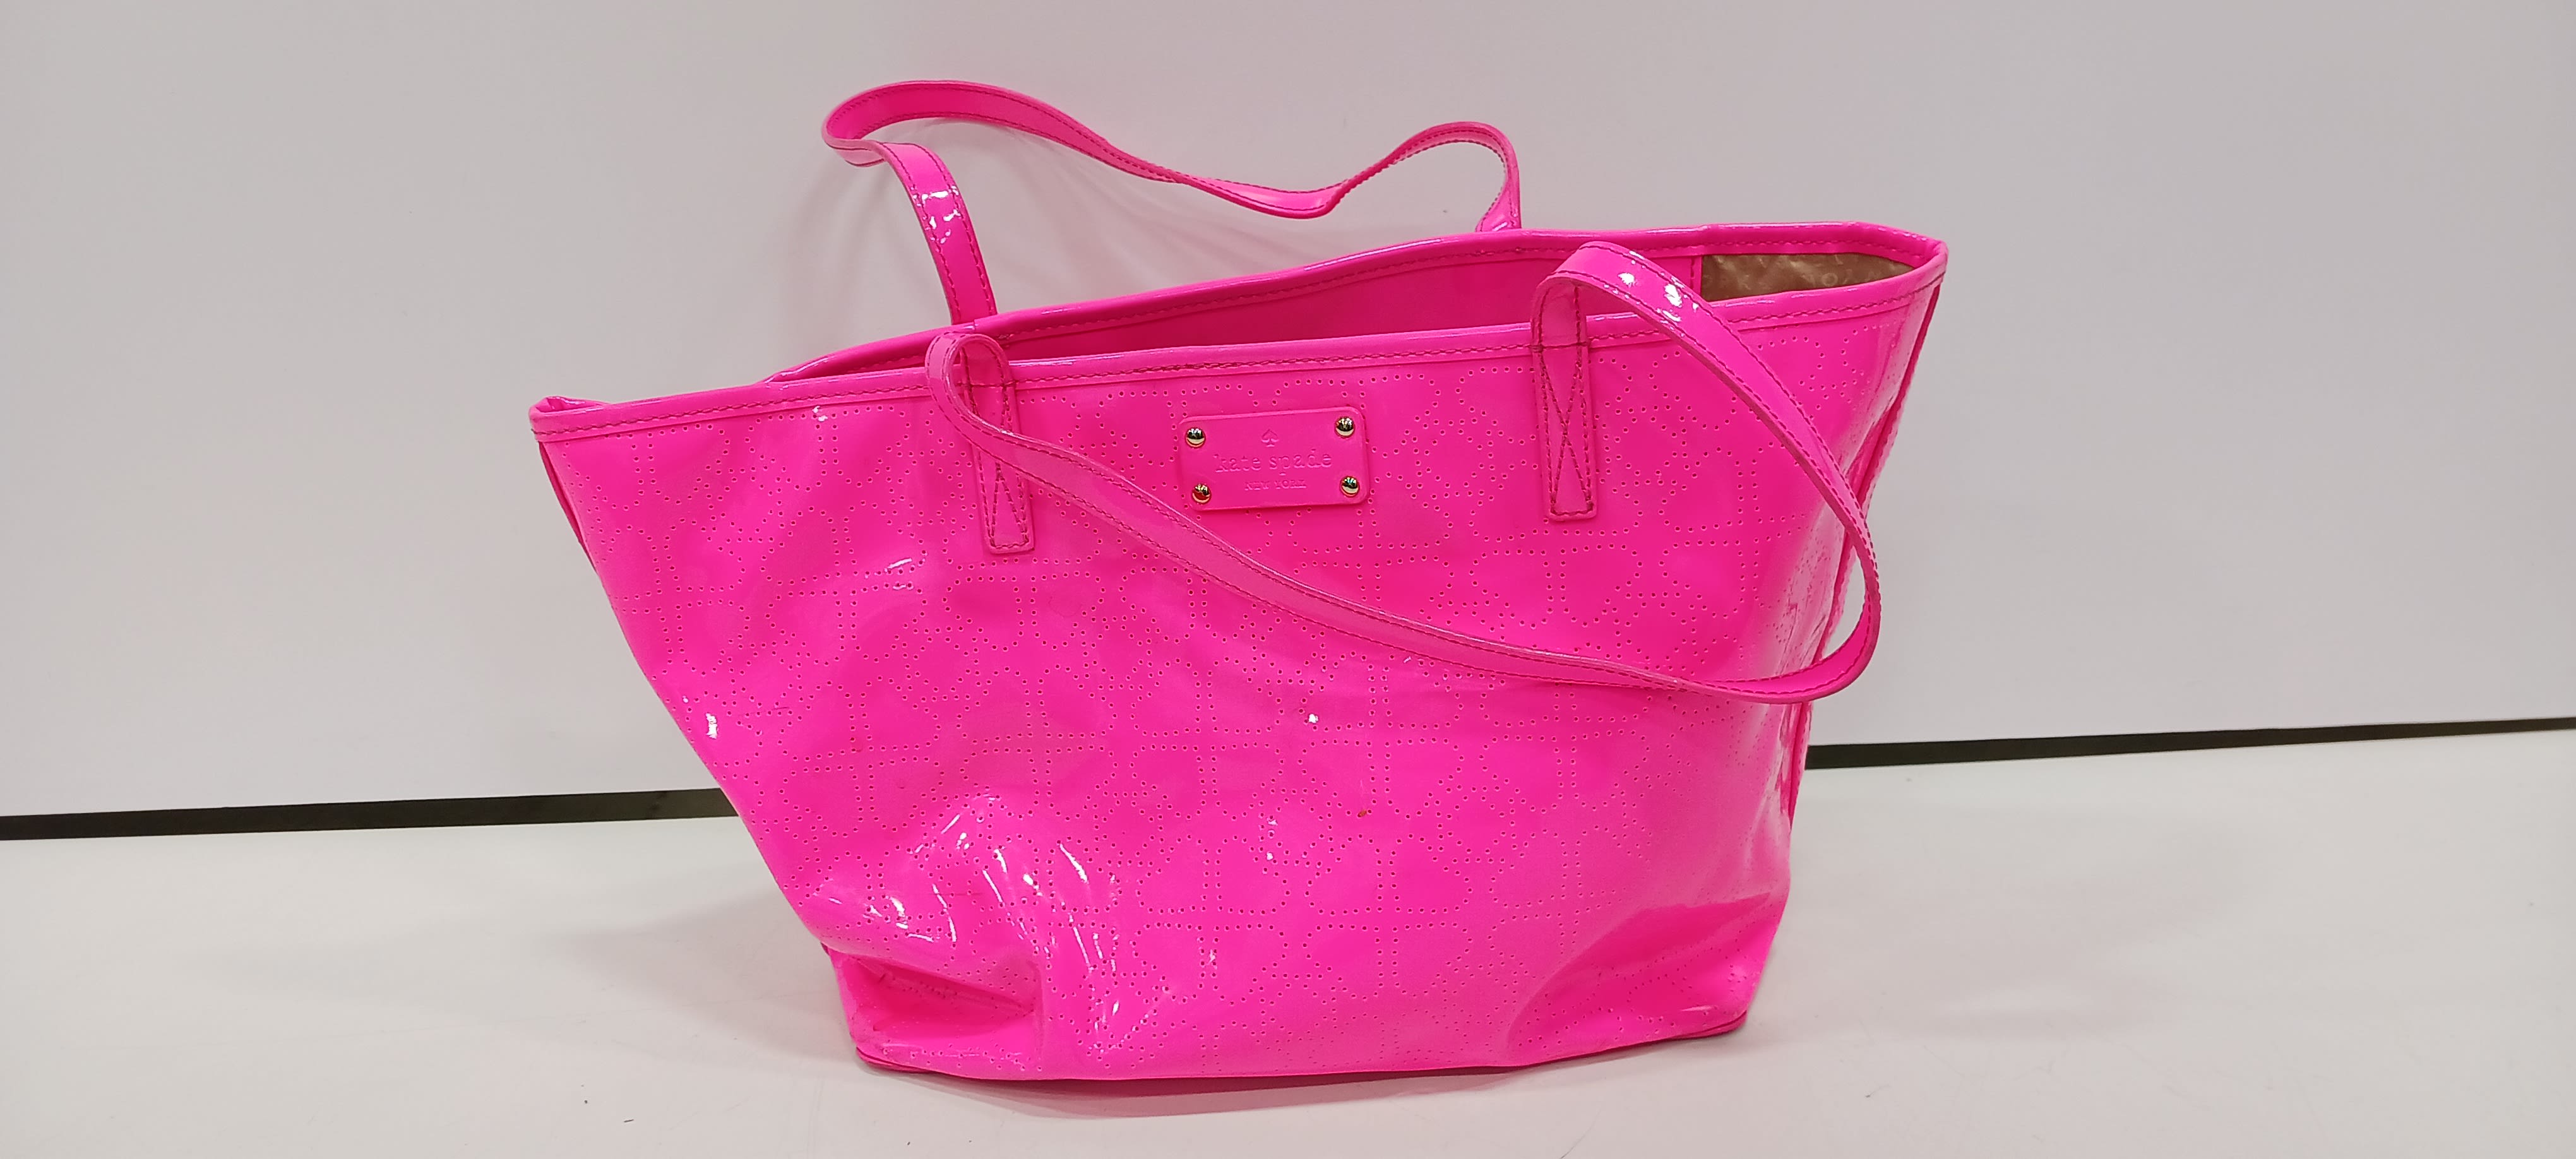 Kate Spade Pink Purse  Kate spade purse pink, Bags, Kate spade handbags